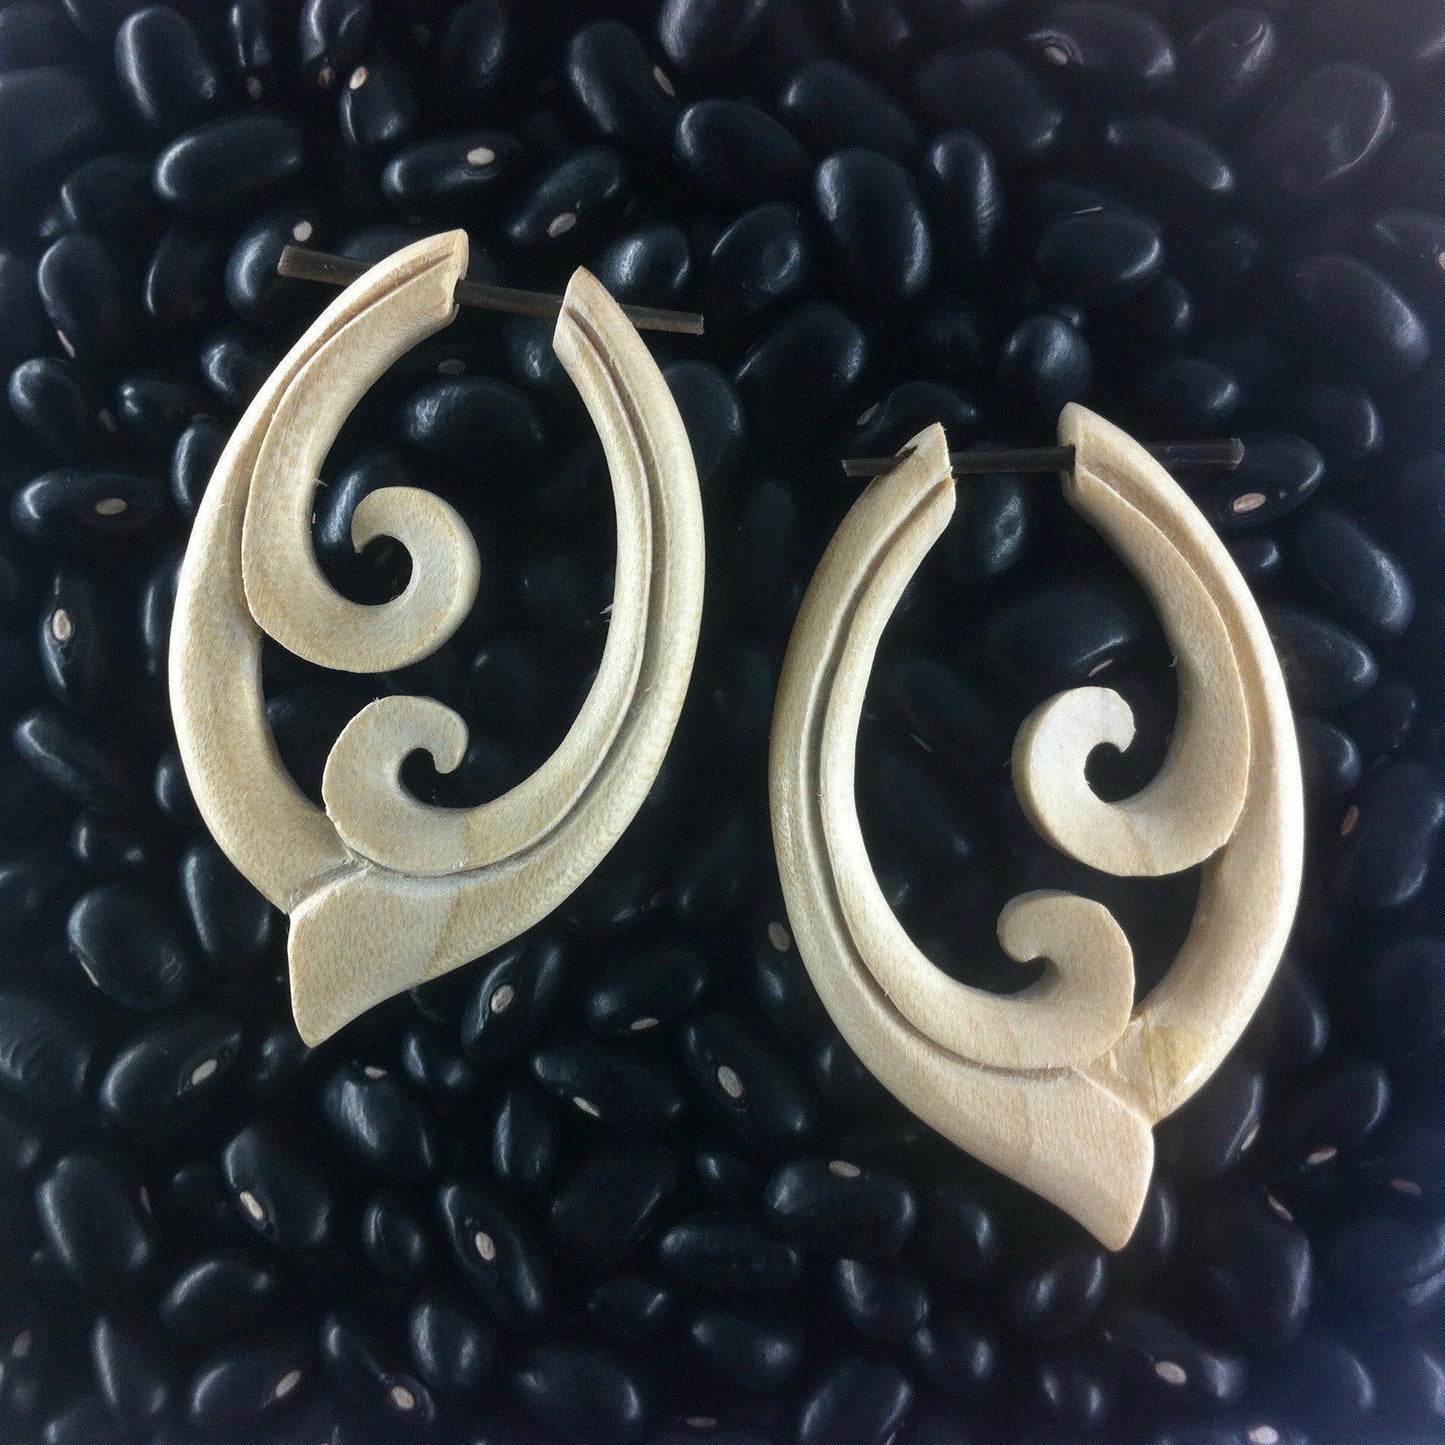 Natural Jewelry :|: Pura Vida. Light Wood Earrings, 1 inch W x 1 3/4 inch L. | Wood Earrings